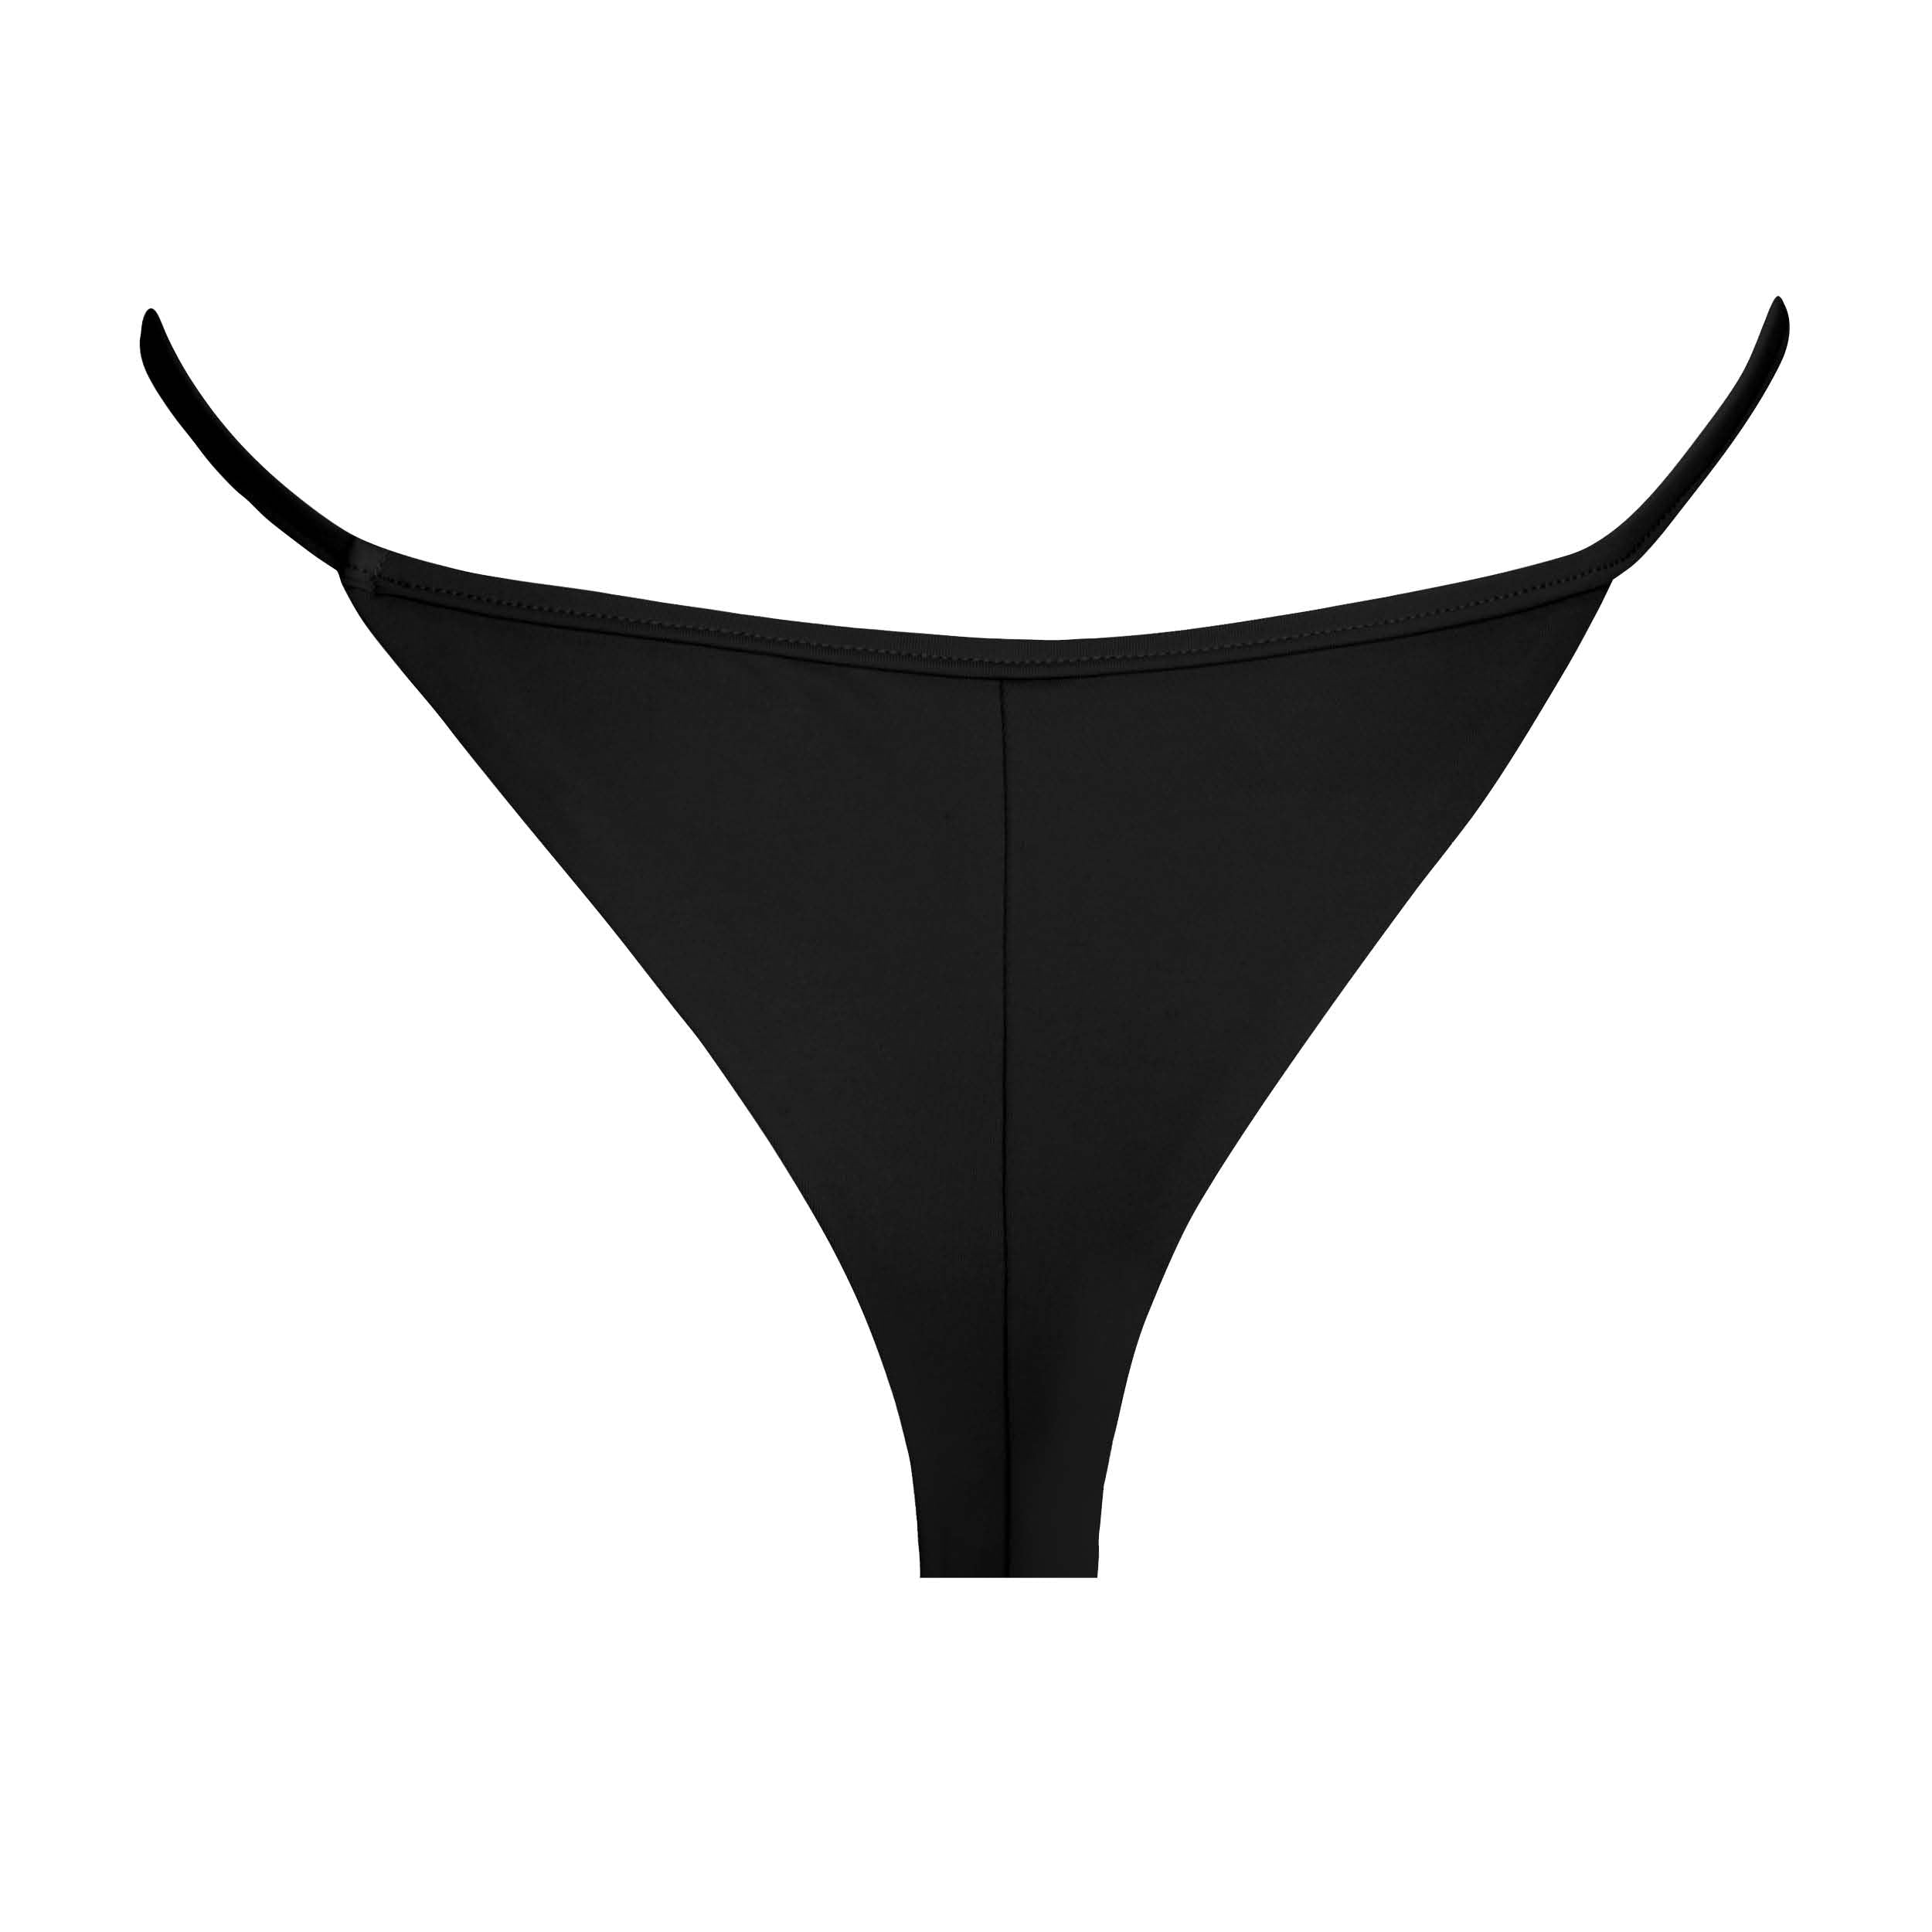 Kashmir: The Cheeky Adjustable String Bikini Bottom